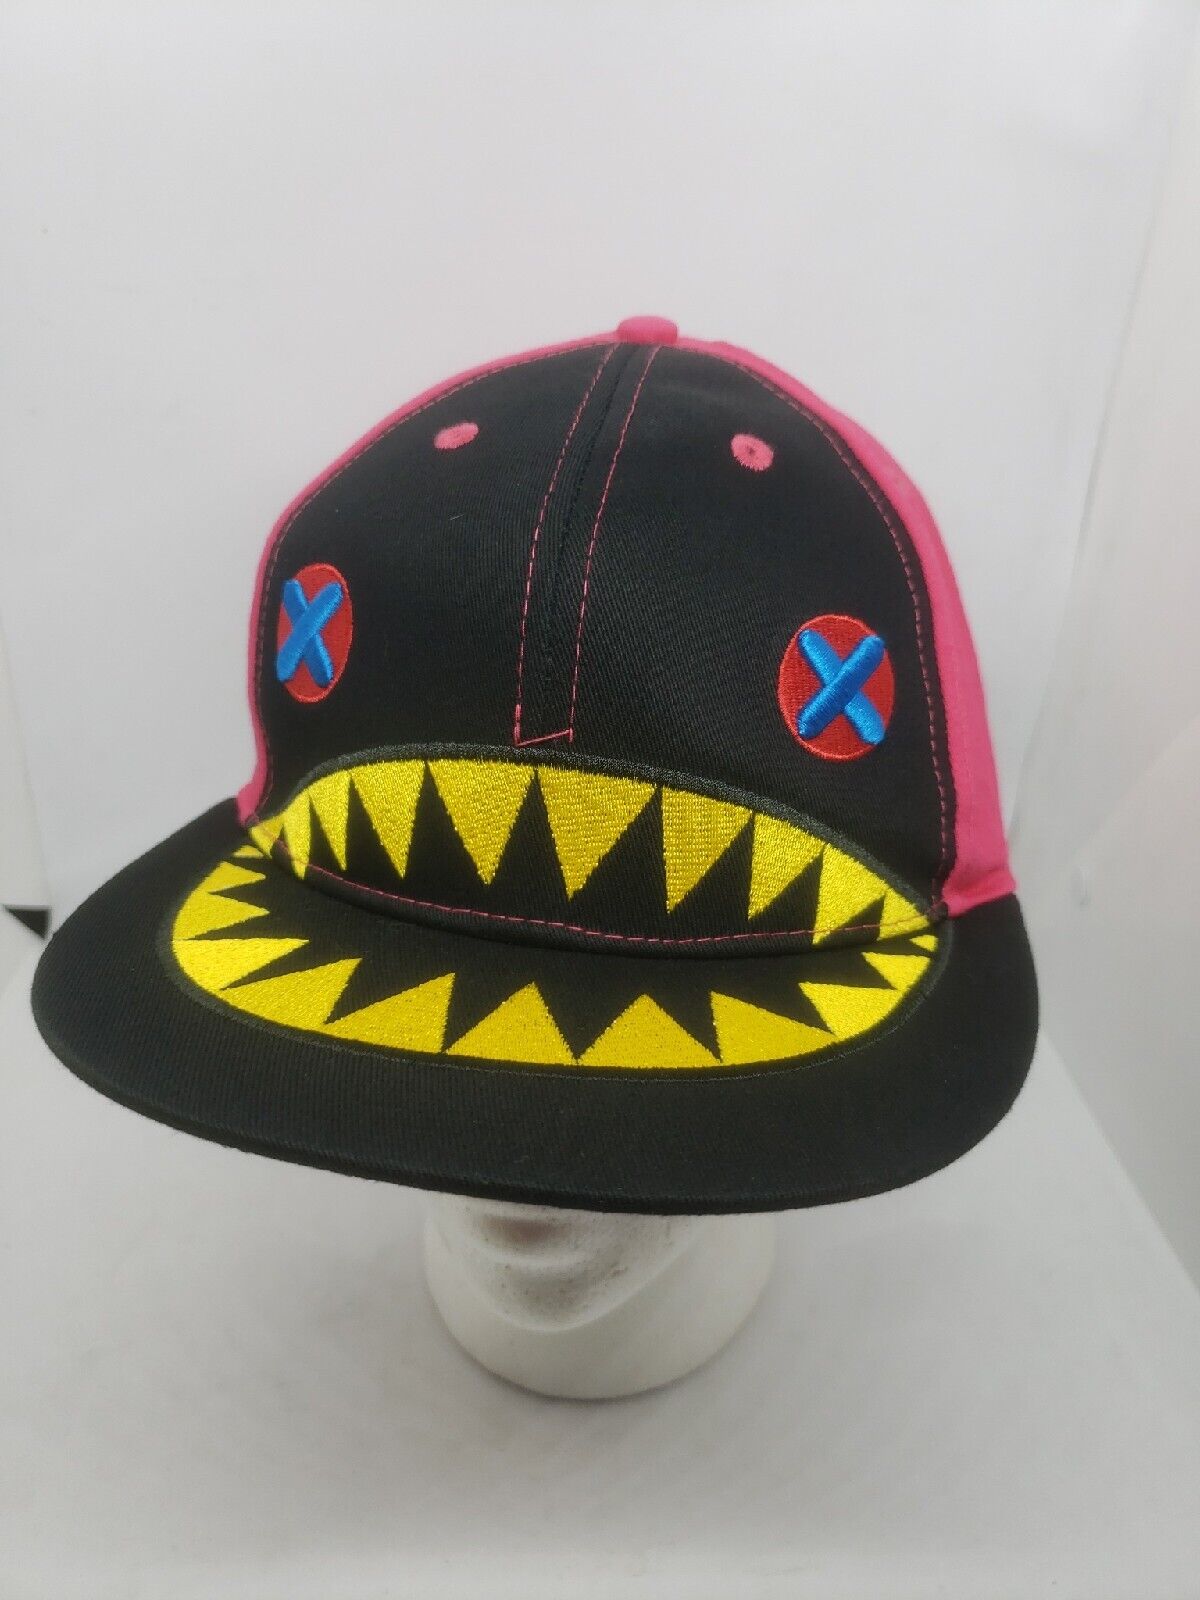 Authentic Locomo | Black One Cap eBay Adjustable Snapback Pink Size Hat Elstinko